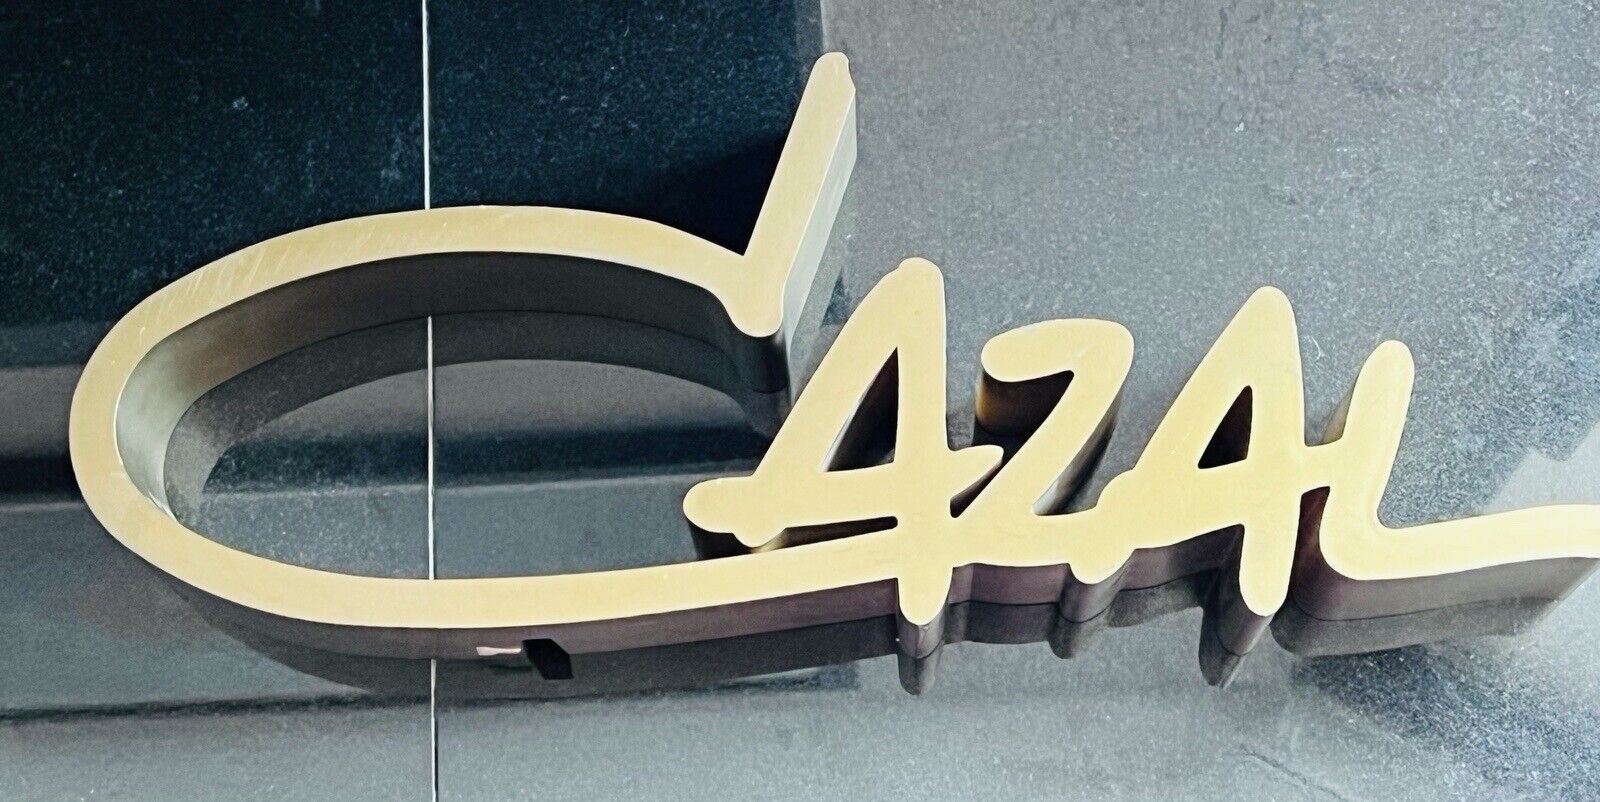 CAZAL Logo Retail Countertop Display- 3D SIGN- In Great Condition - Bronze